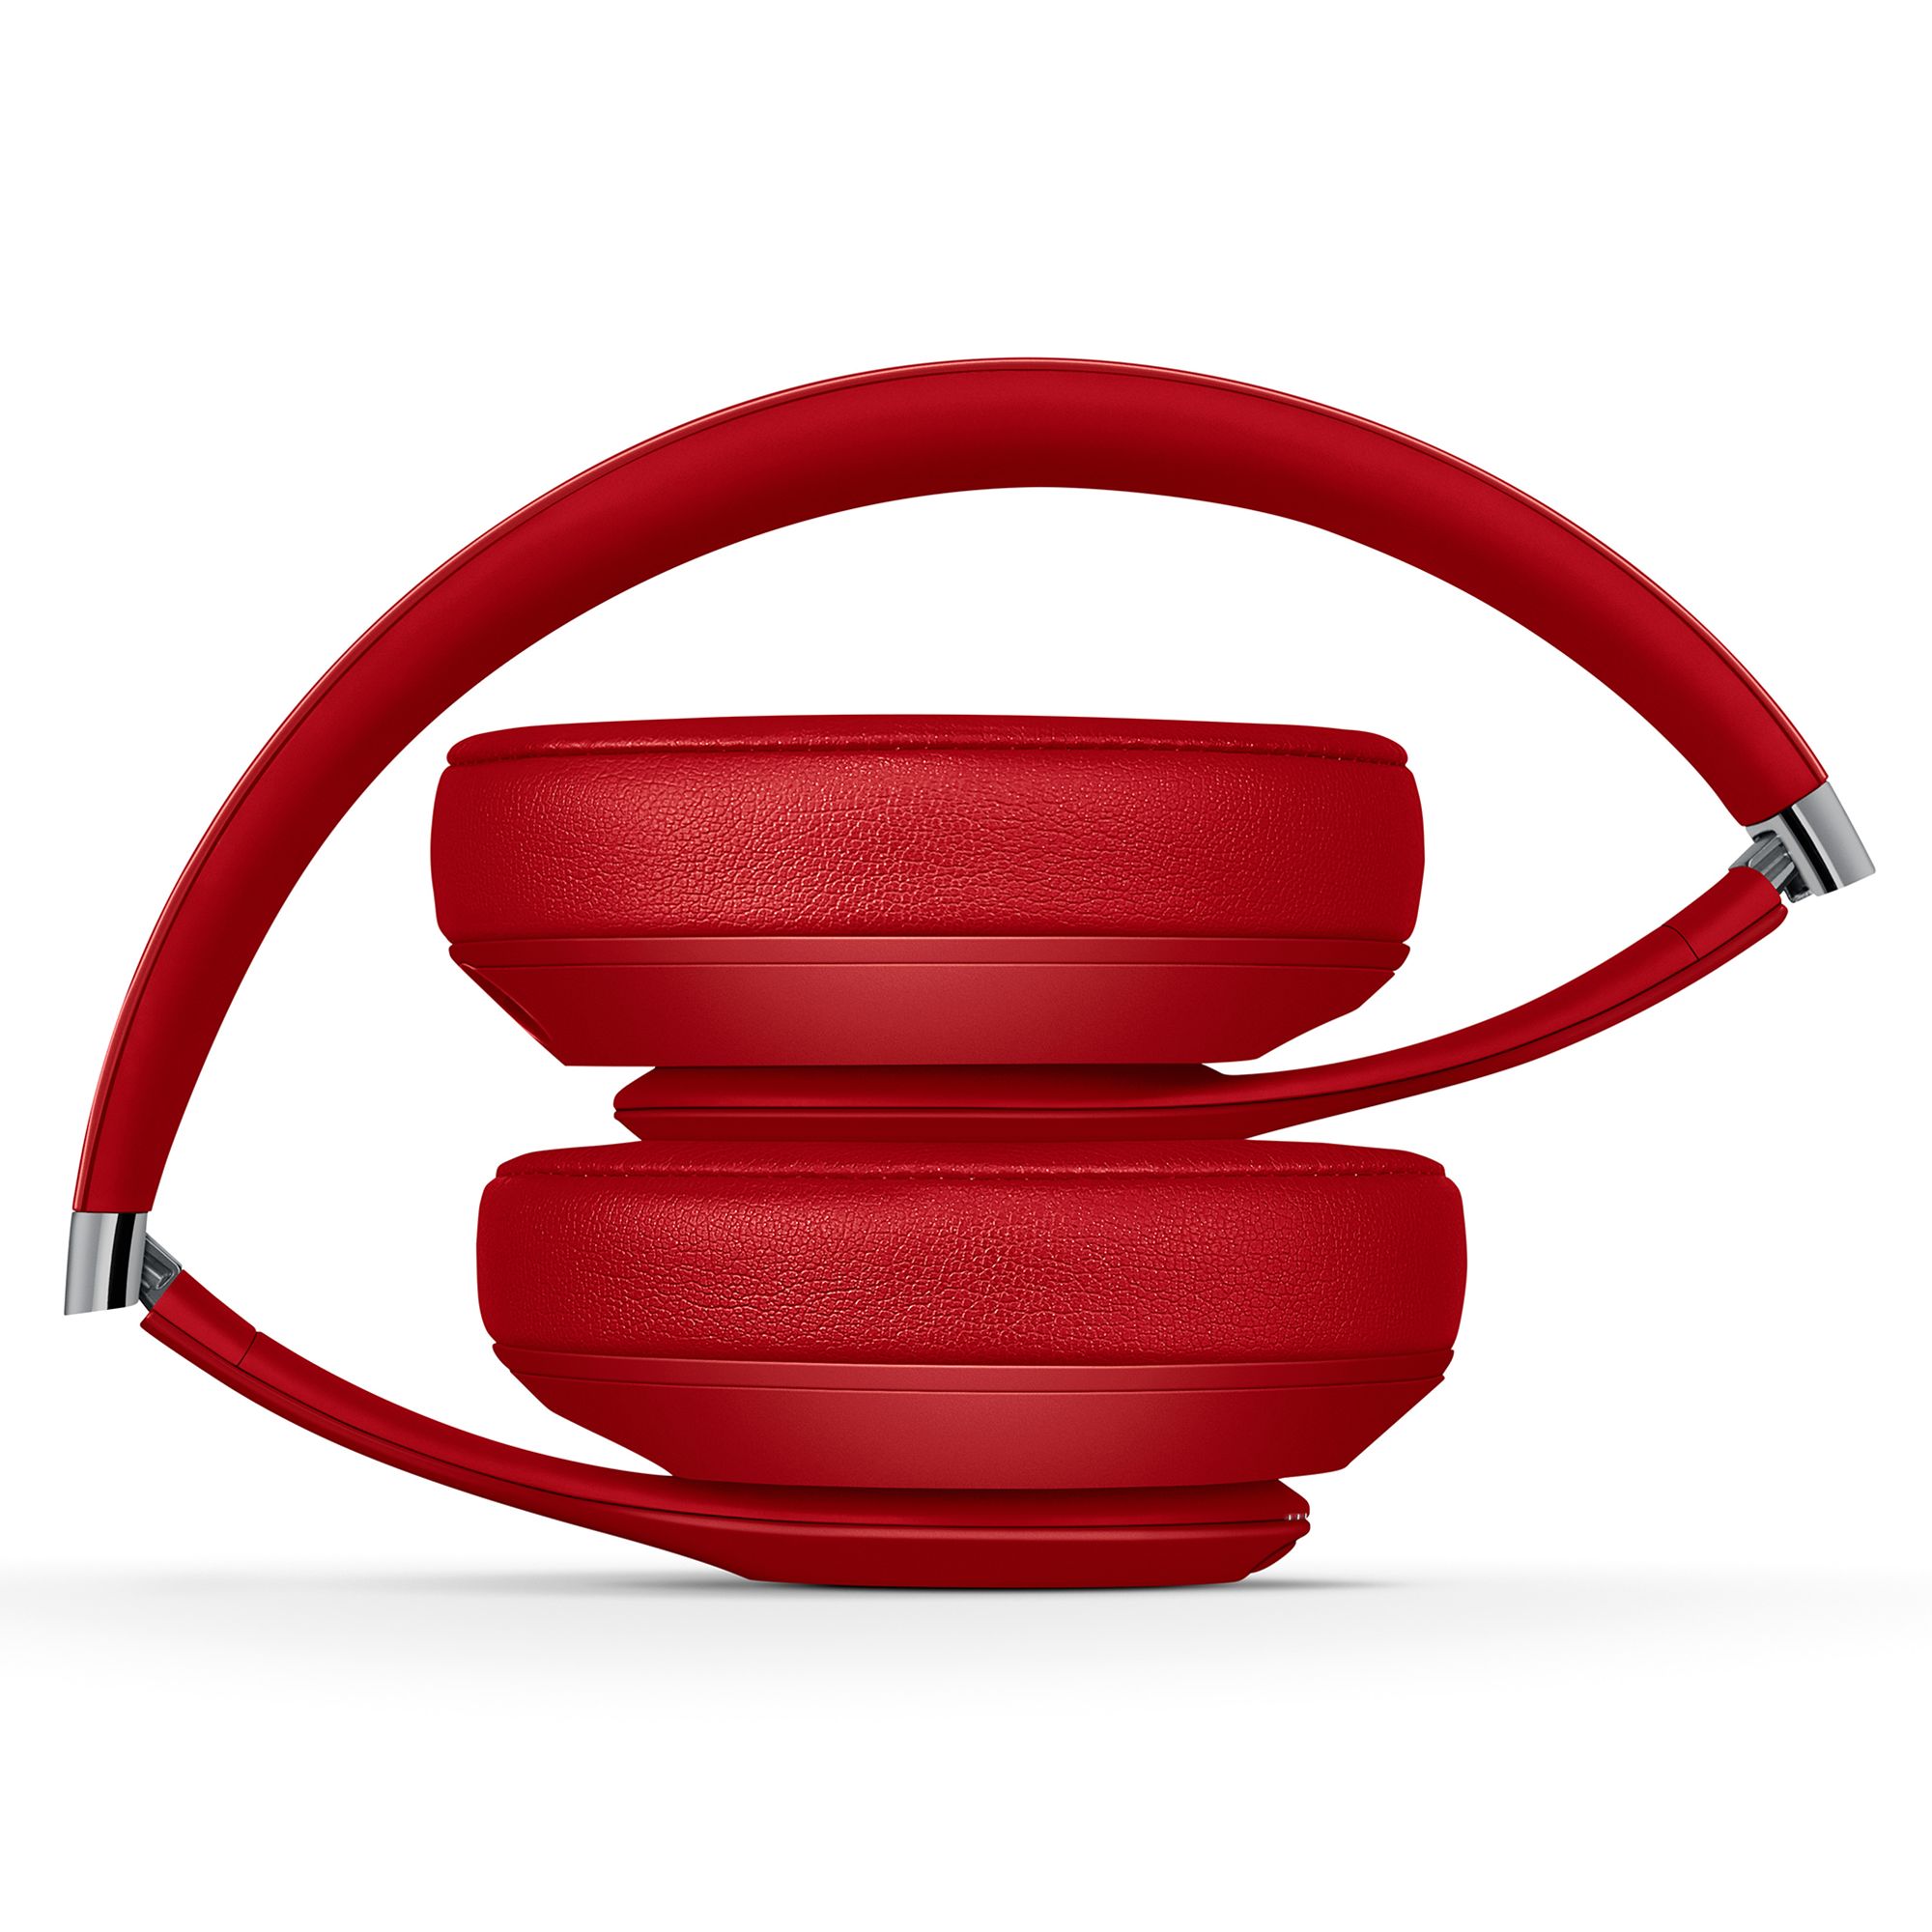 Beats Studio³ Wireless Bluetooth Over-Ear Headphones with Pure